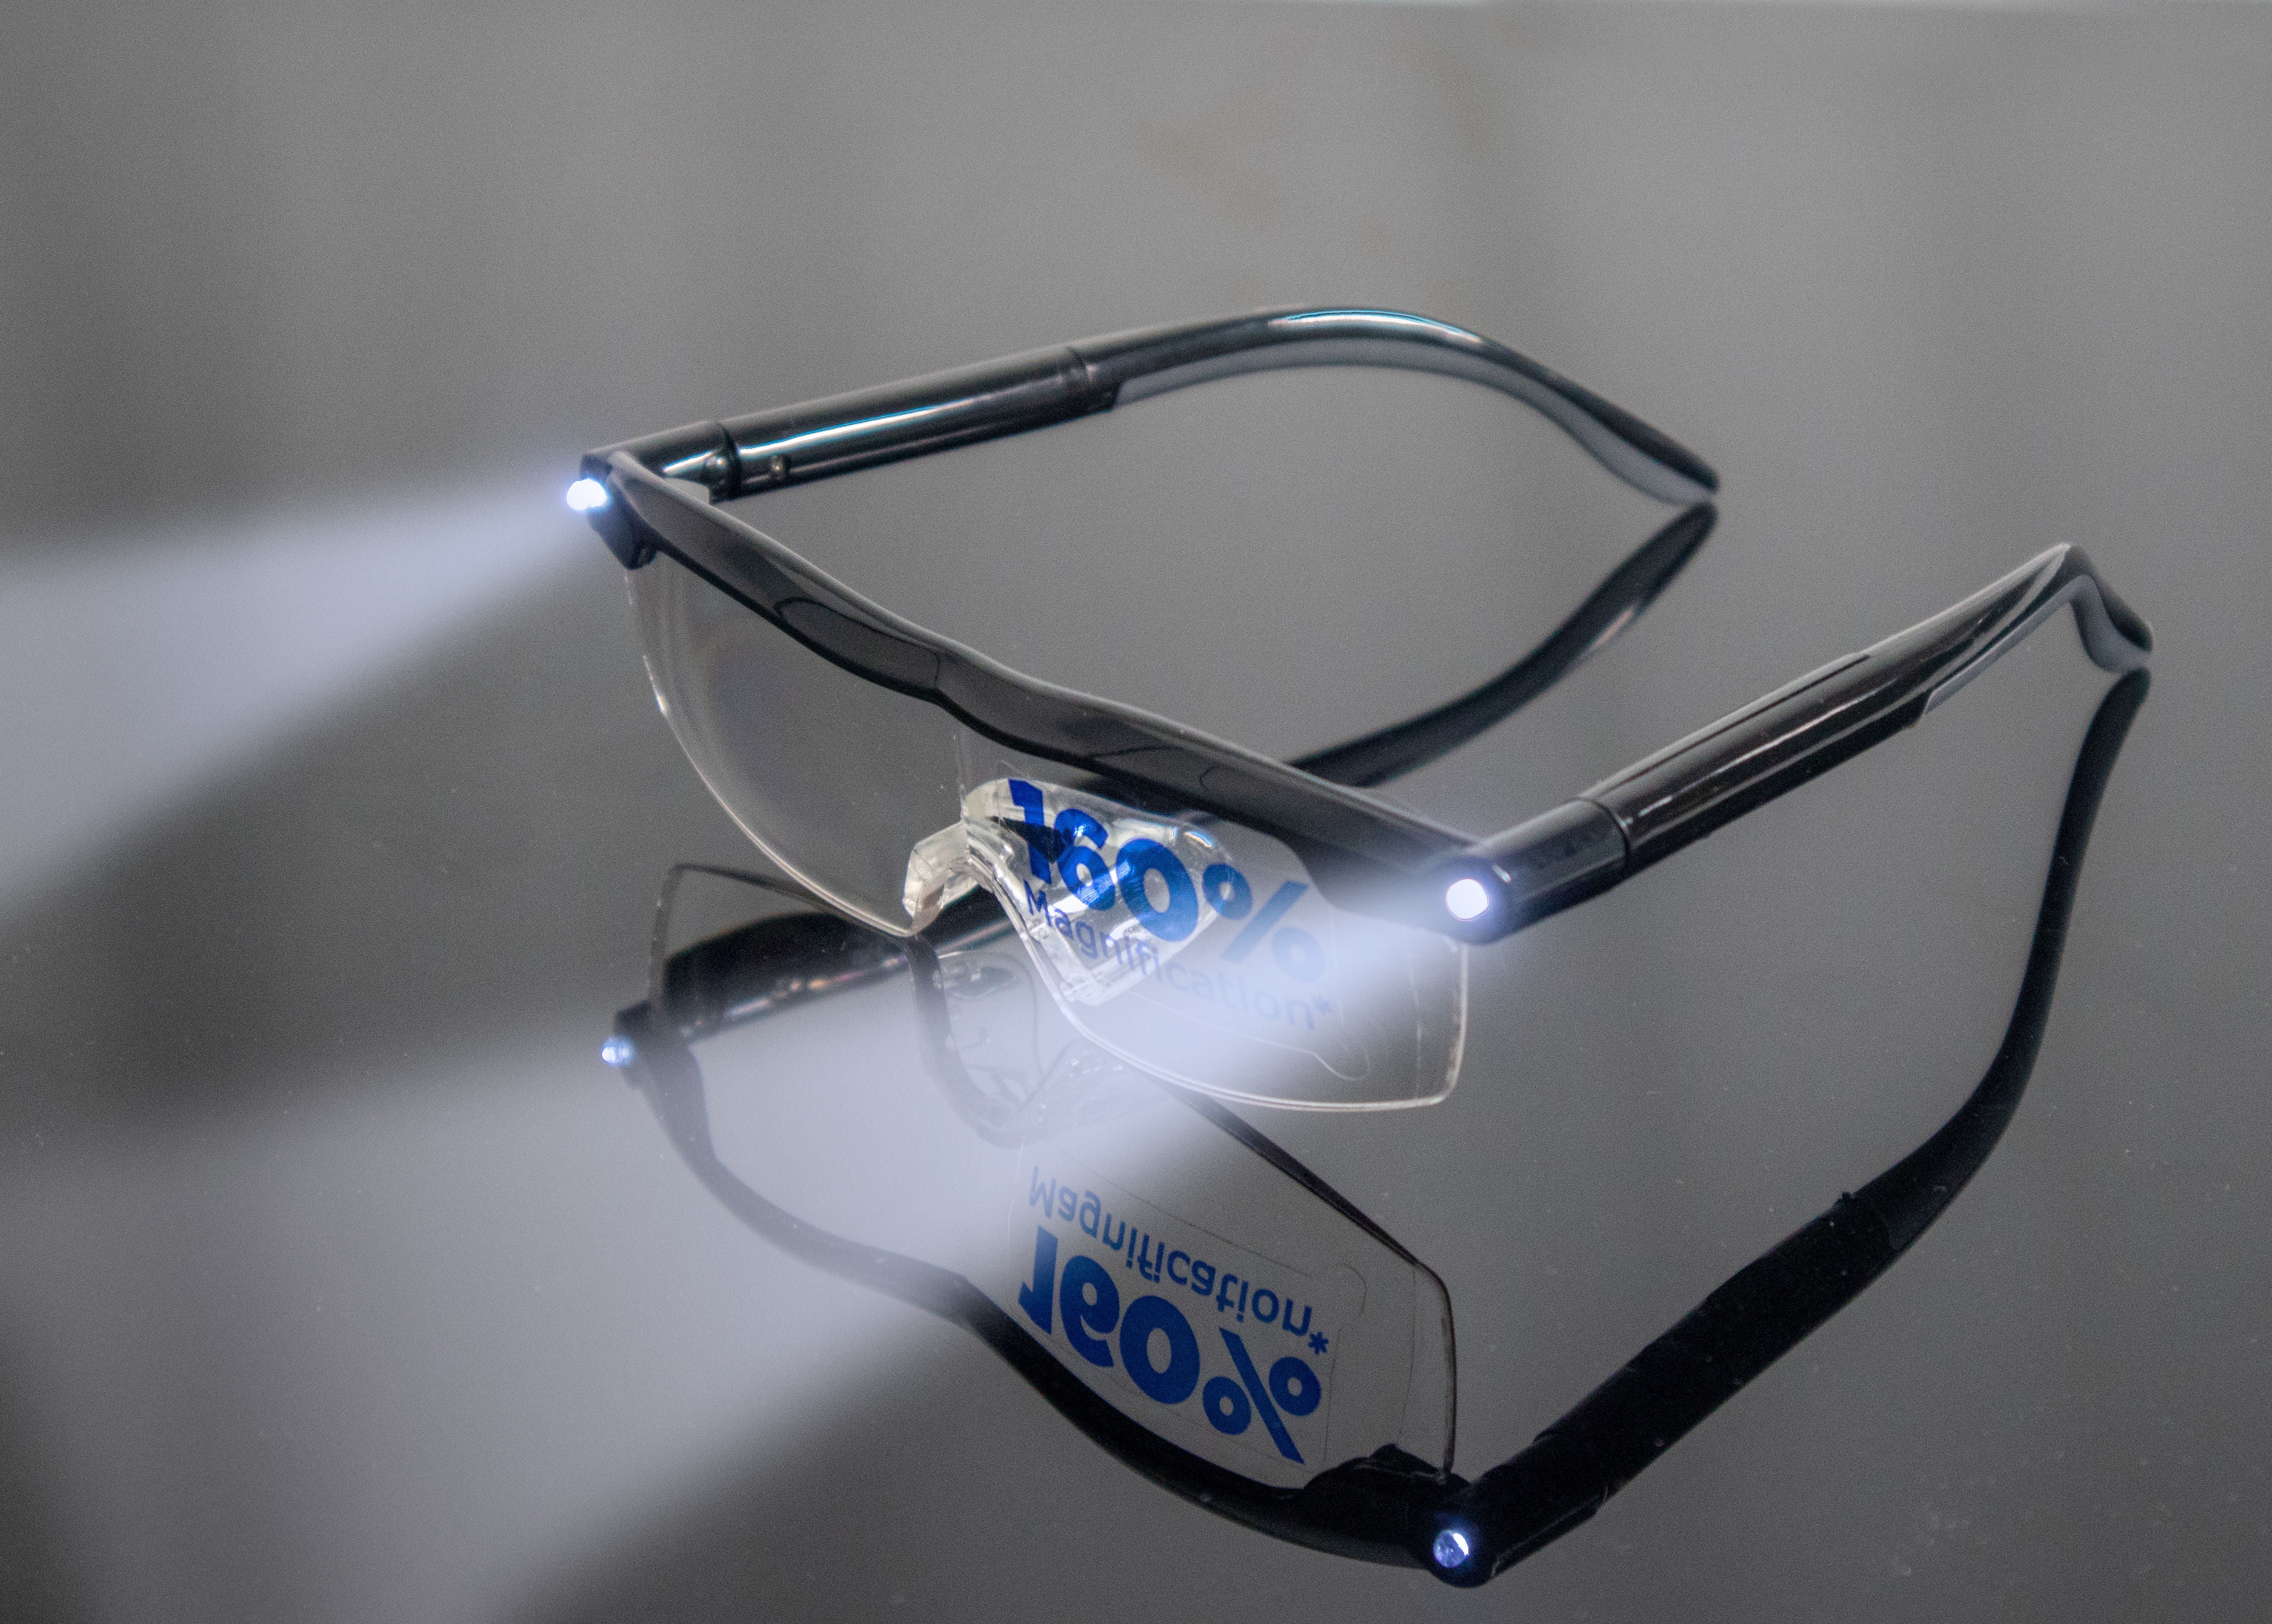 JML Mighty Sight LED Magnifying Eyewear — ACE TECH